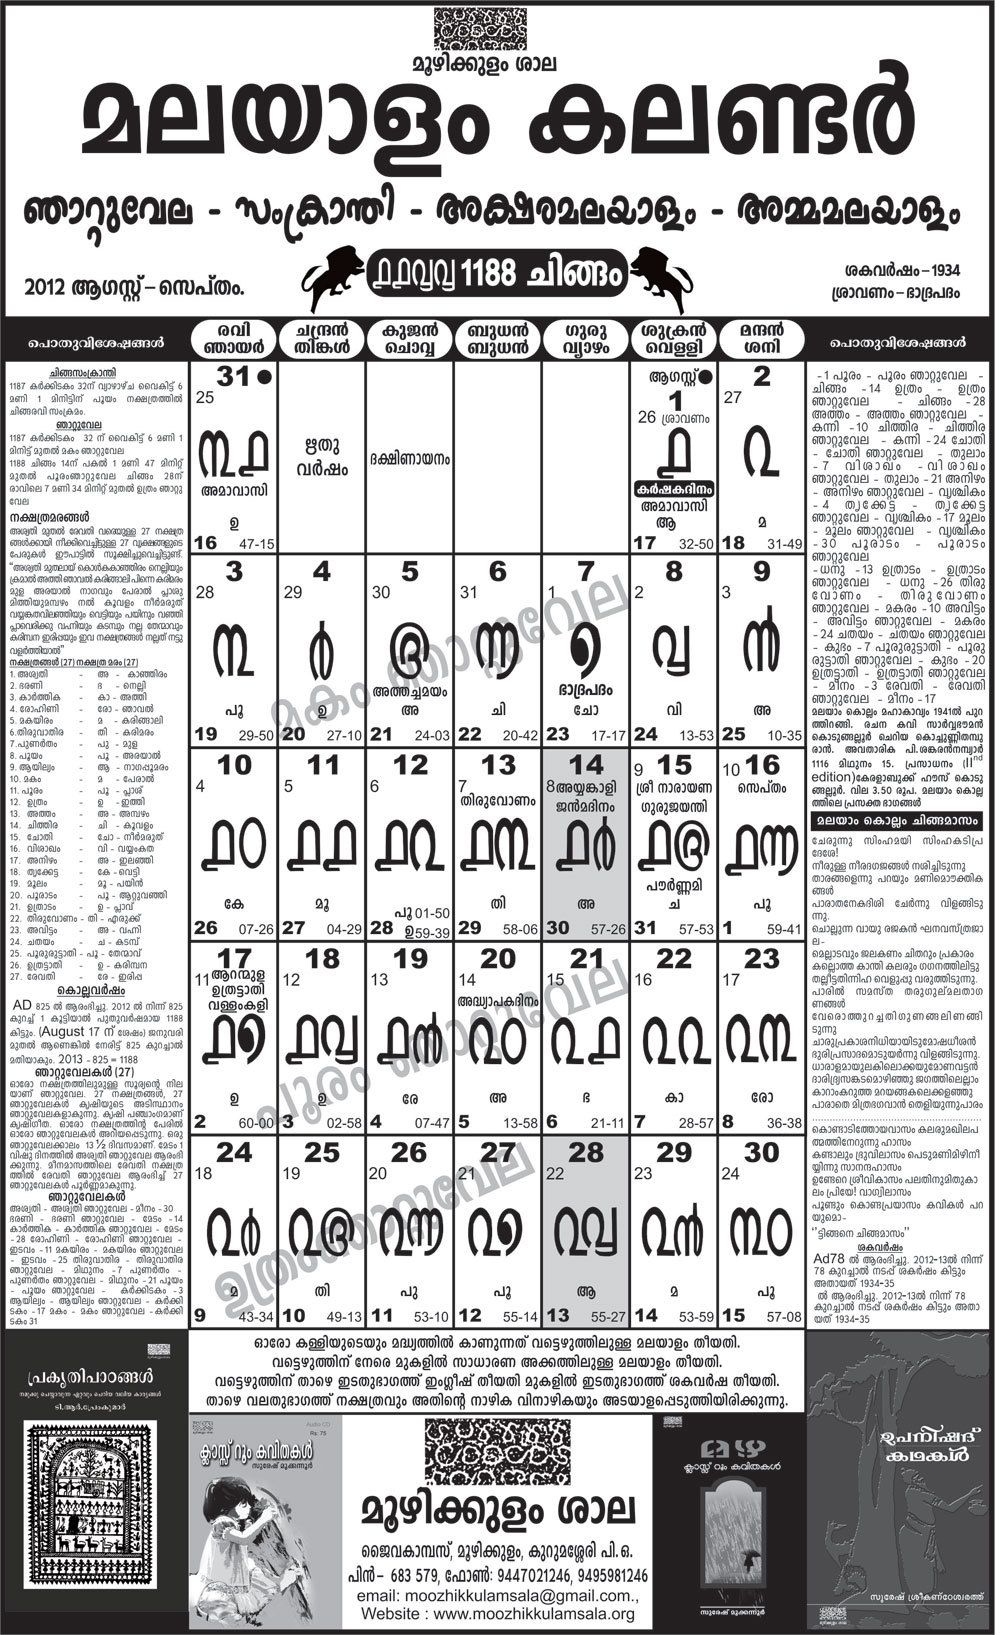 Malayalam Calendar Zodiac Signs In 2020 | Zodiac Signs Malayalam Calendar Zodiac Signs